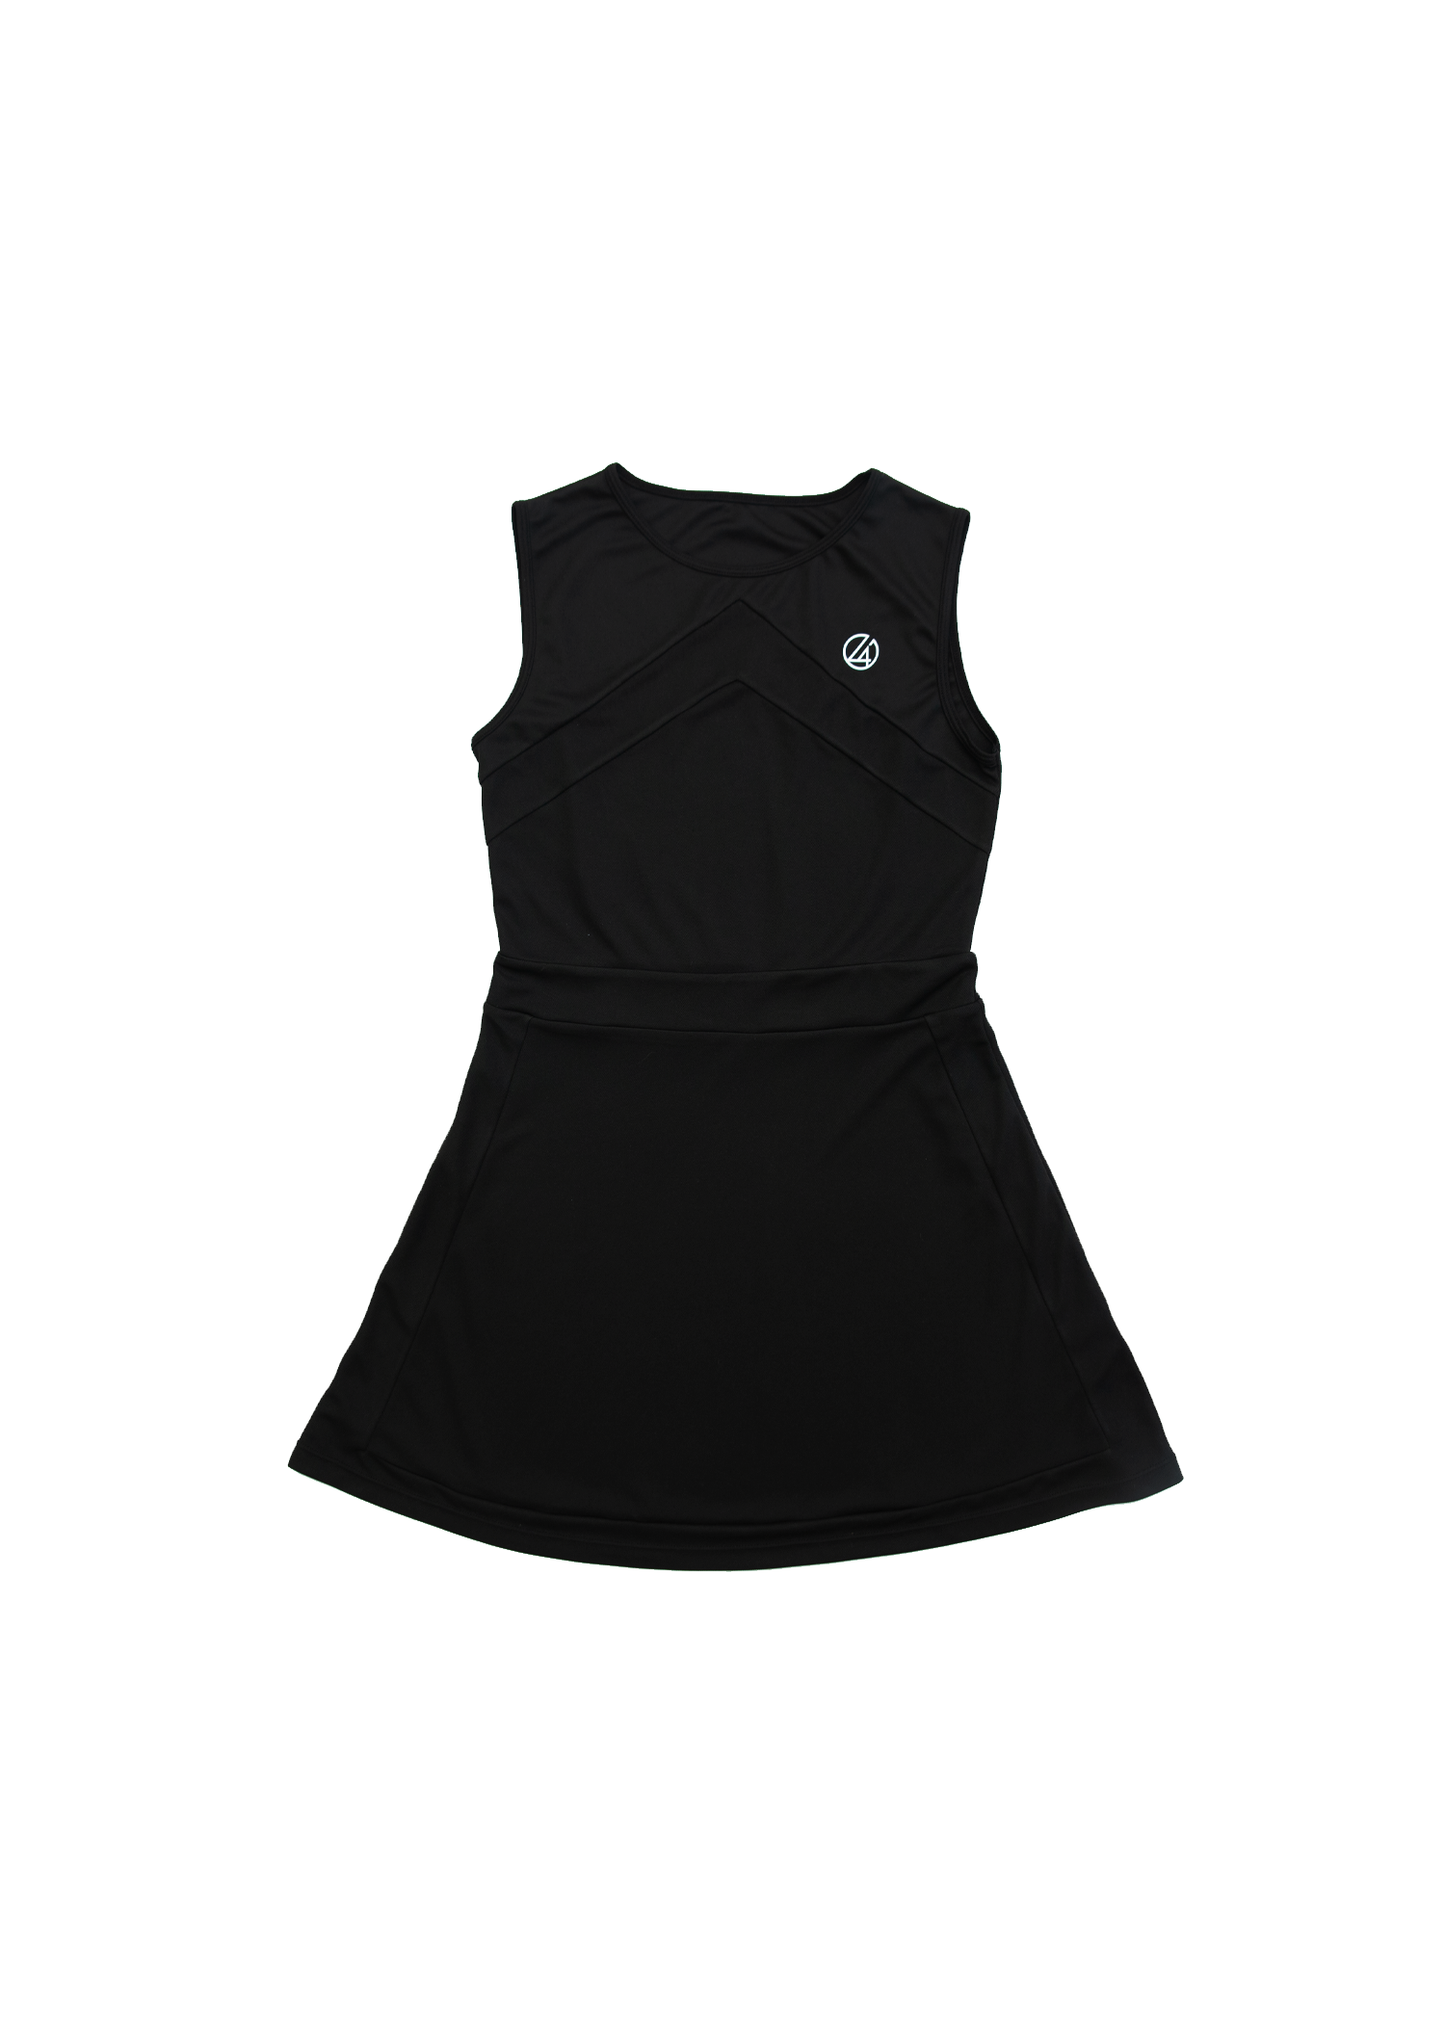 Match Point Dress - Black